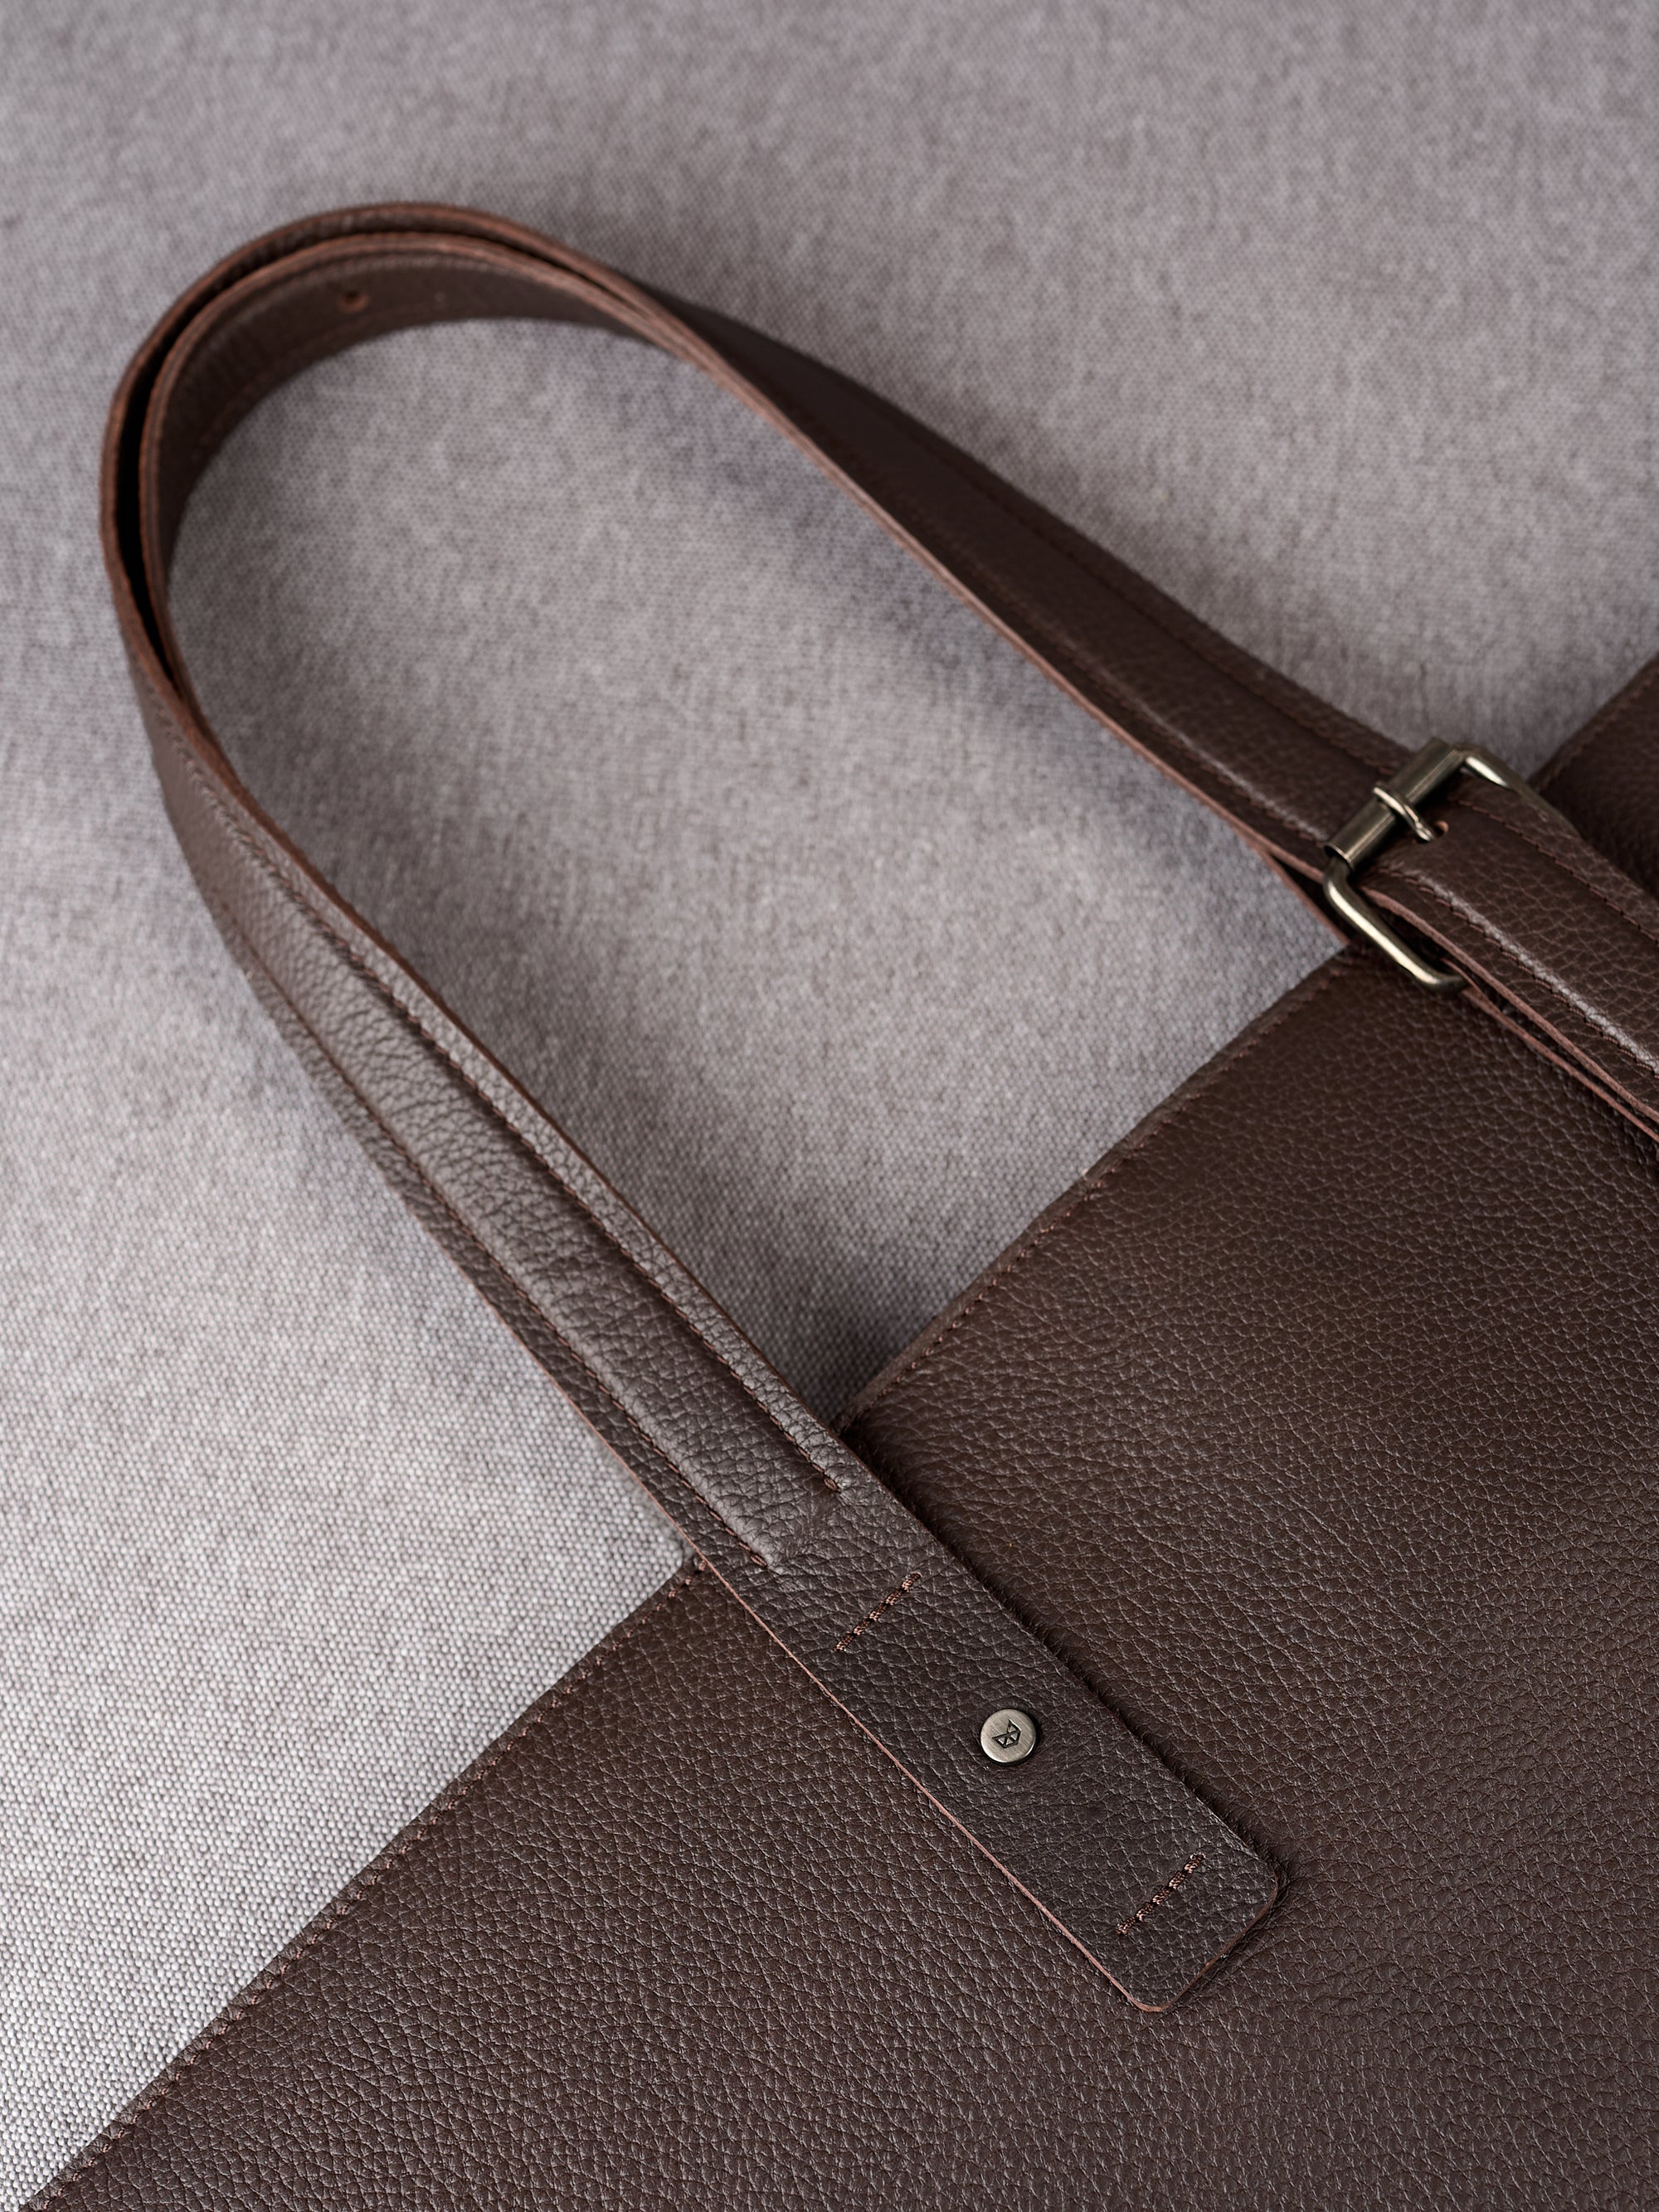 Shoulder Straps. Mens Suit Bag Dark Brown by Capra Leather